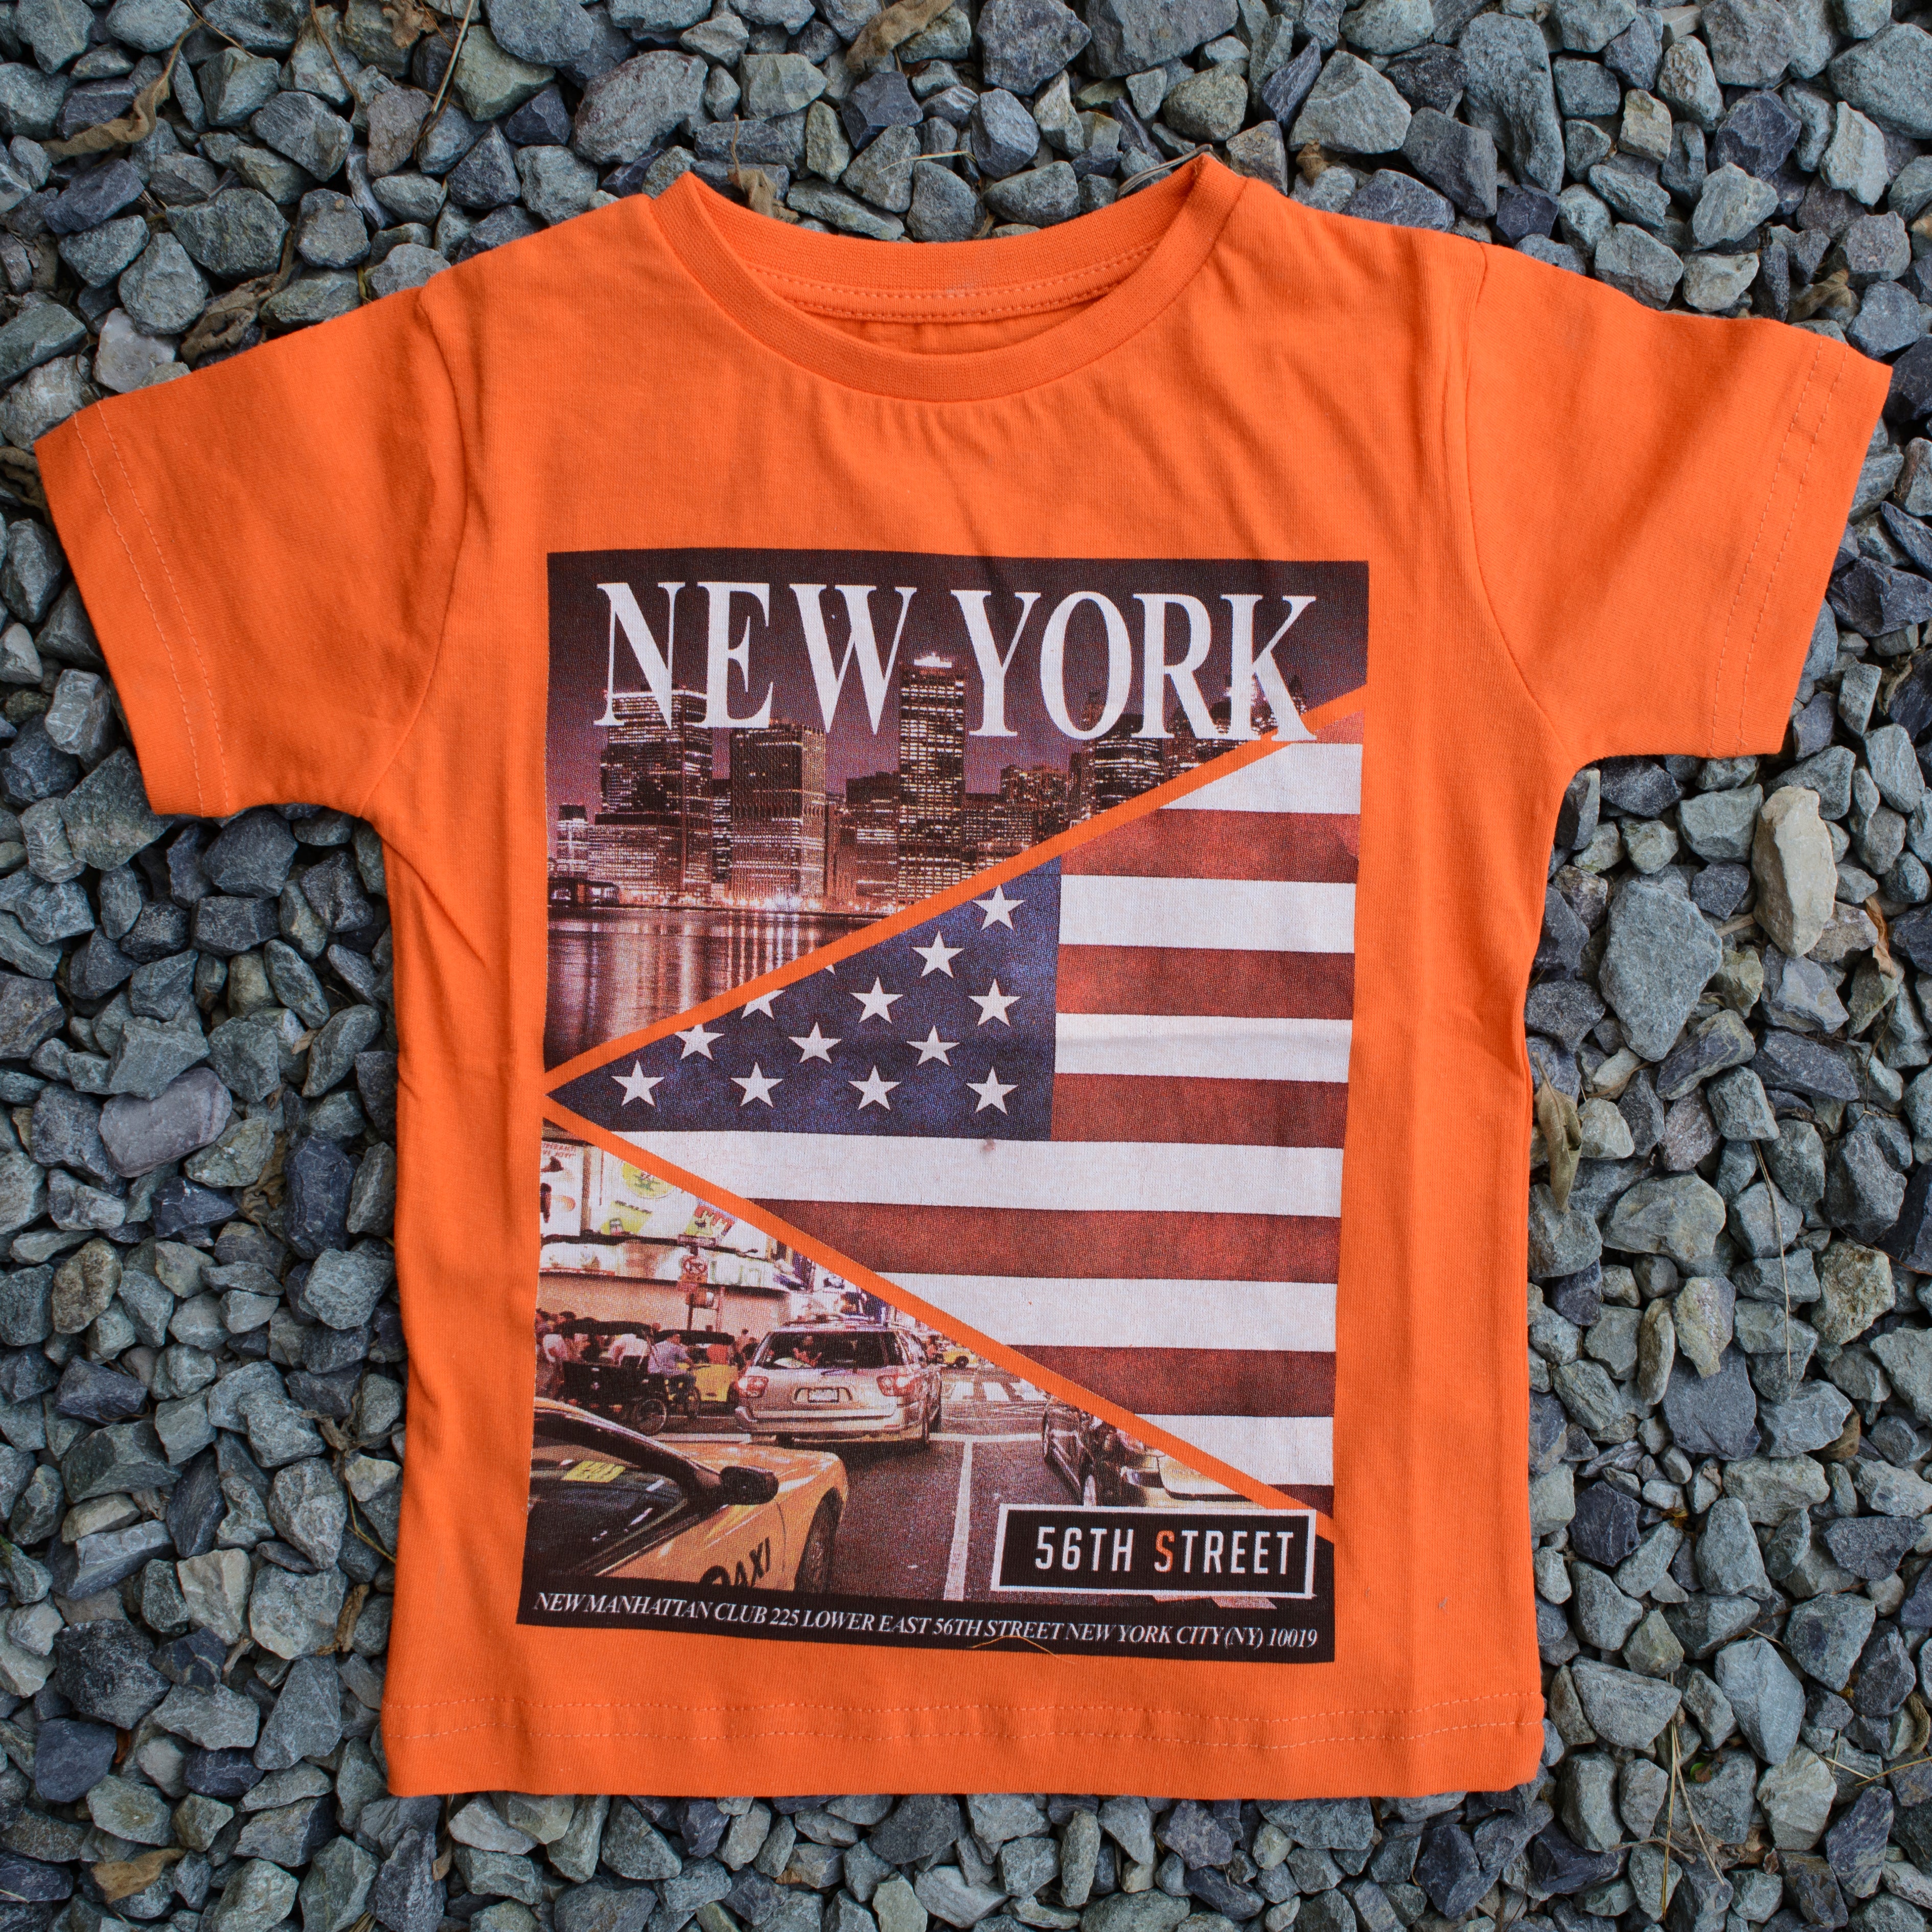 New York - Children T-Shirt Collection - Little Boy, and Girls Clothing - Kids Cotton Tee - Wear Sierra